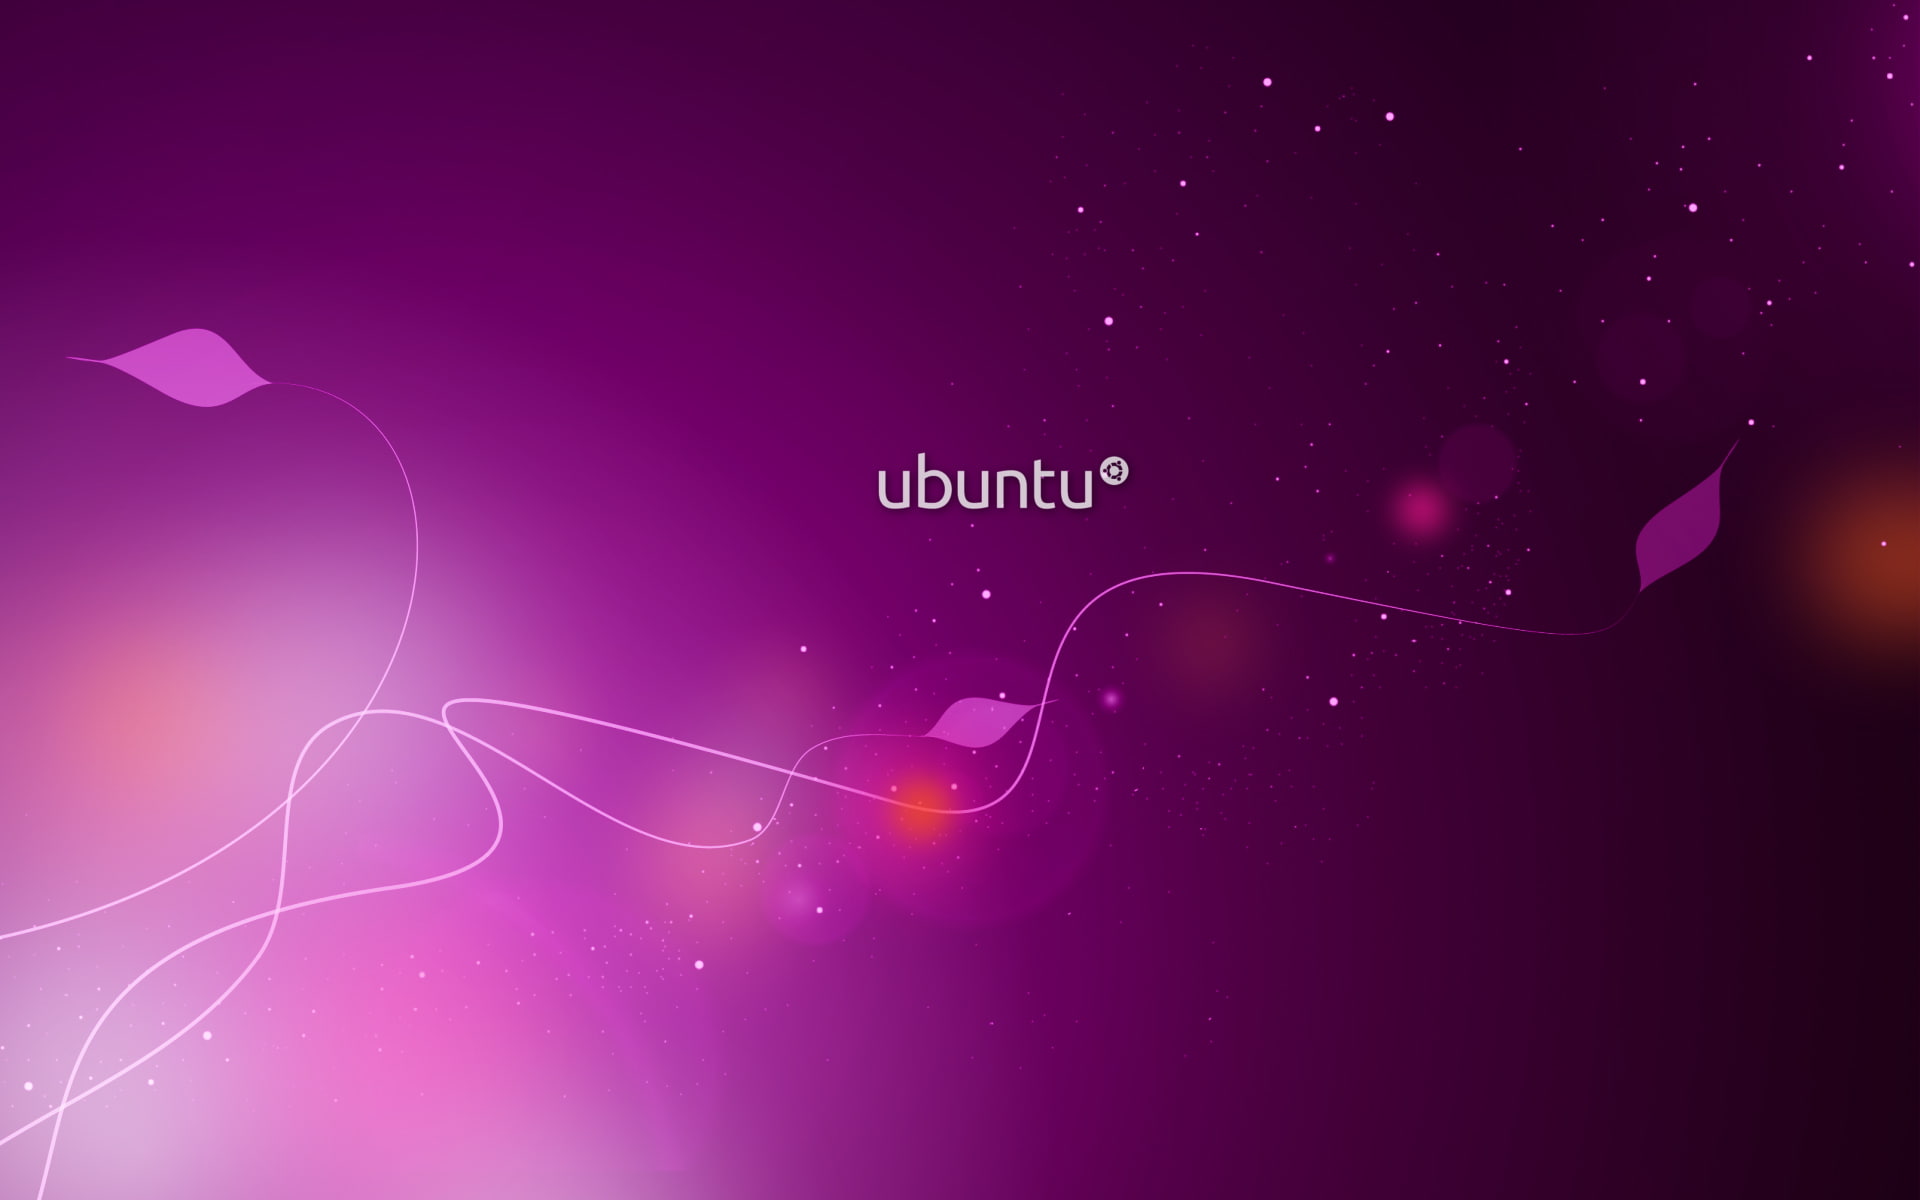 debian, gnome, linux, ubuntu